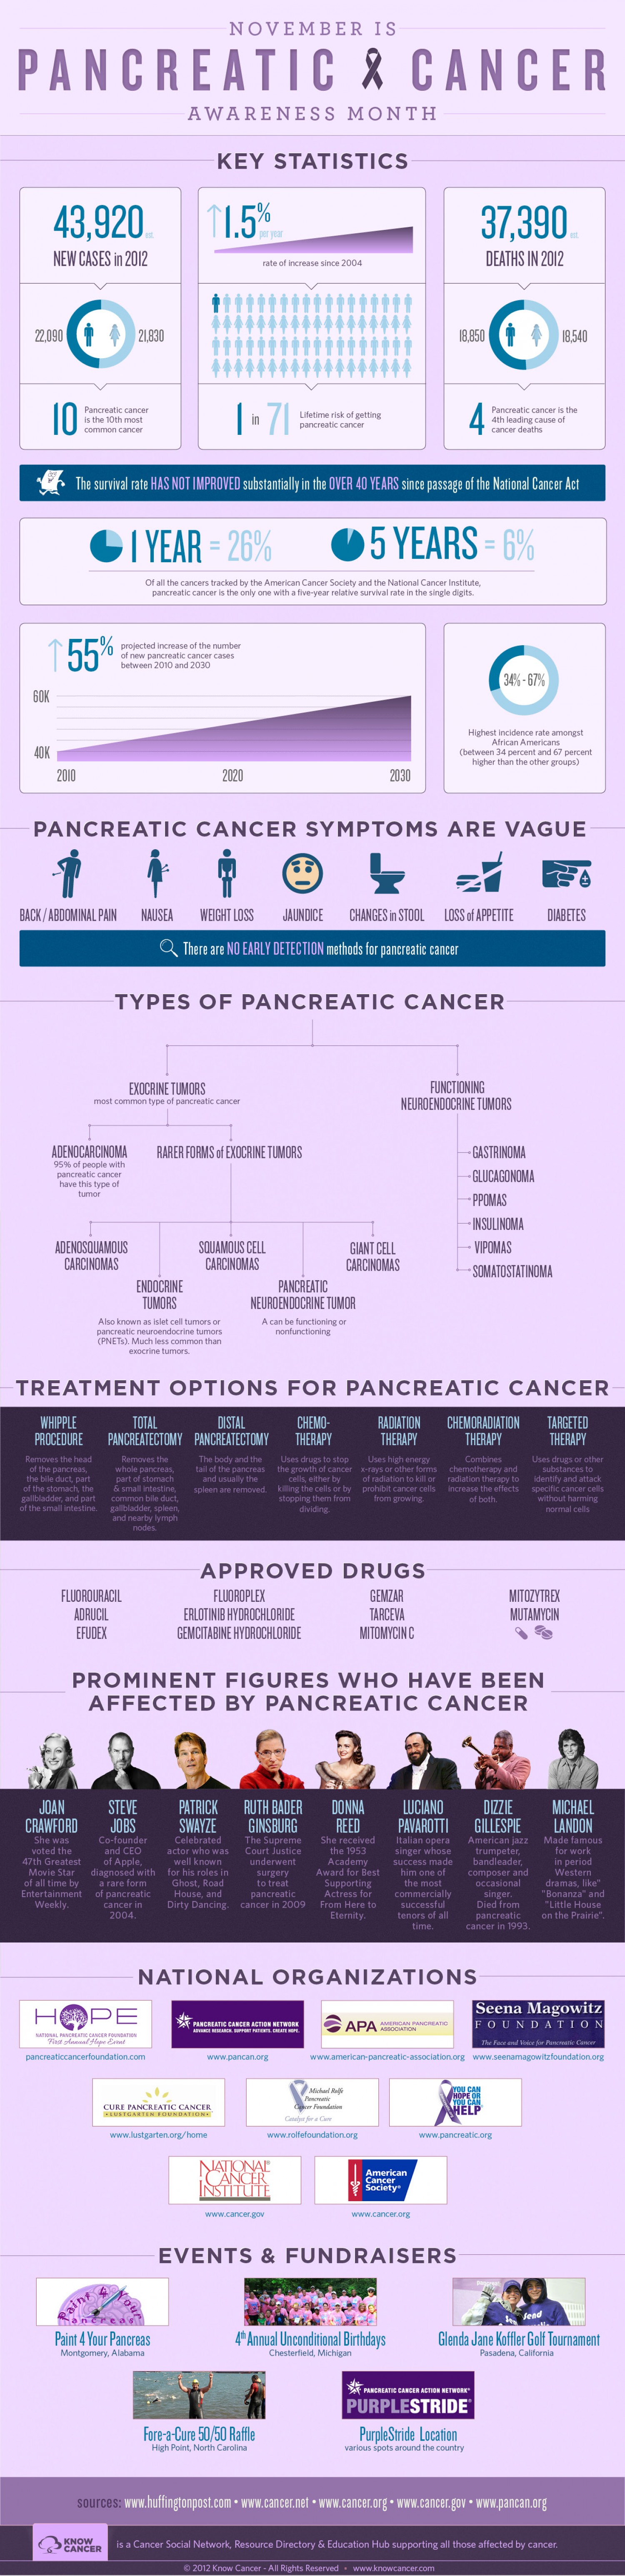 Pancreatic Cancer Statistics